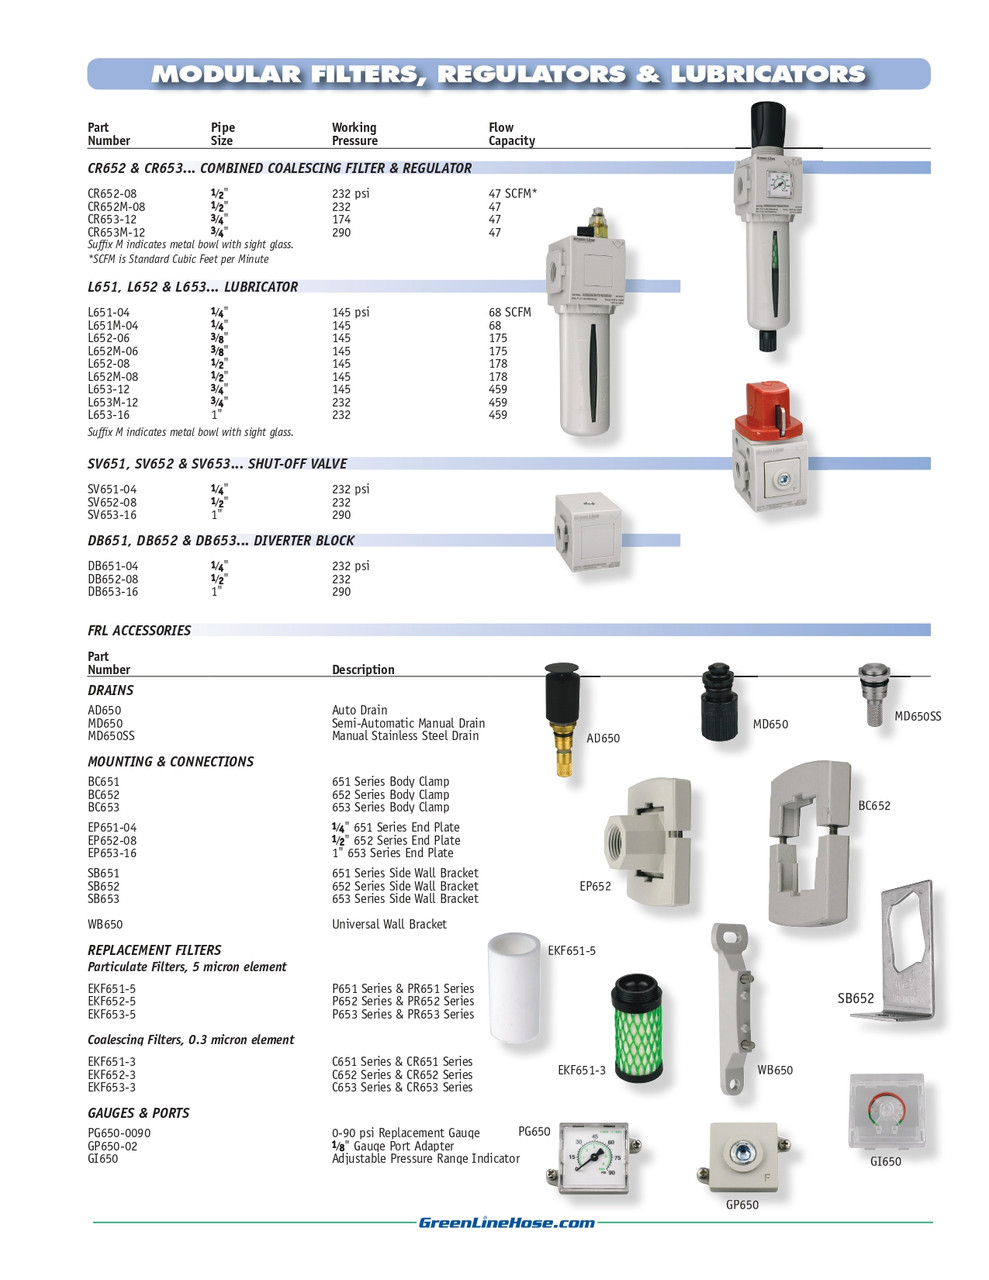 Adjustable Pressure Range Indicator for 651, 652 & 653 Series Filters & Regulators  GI650